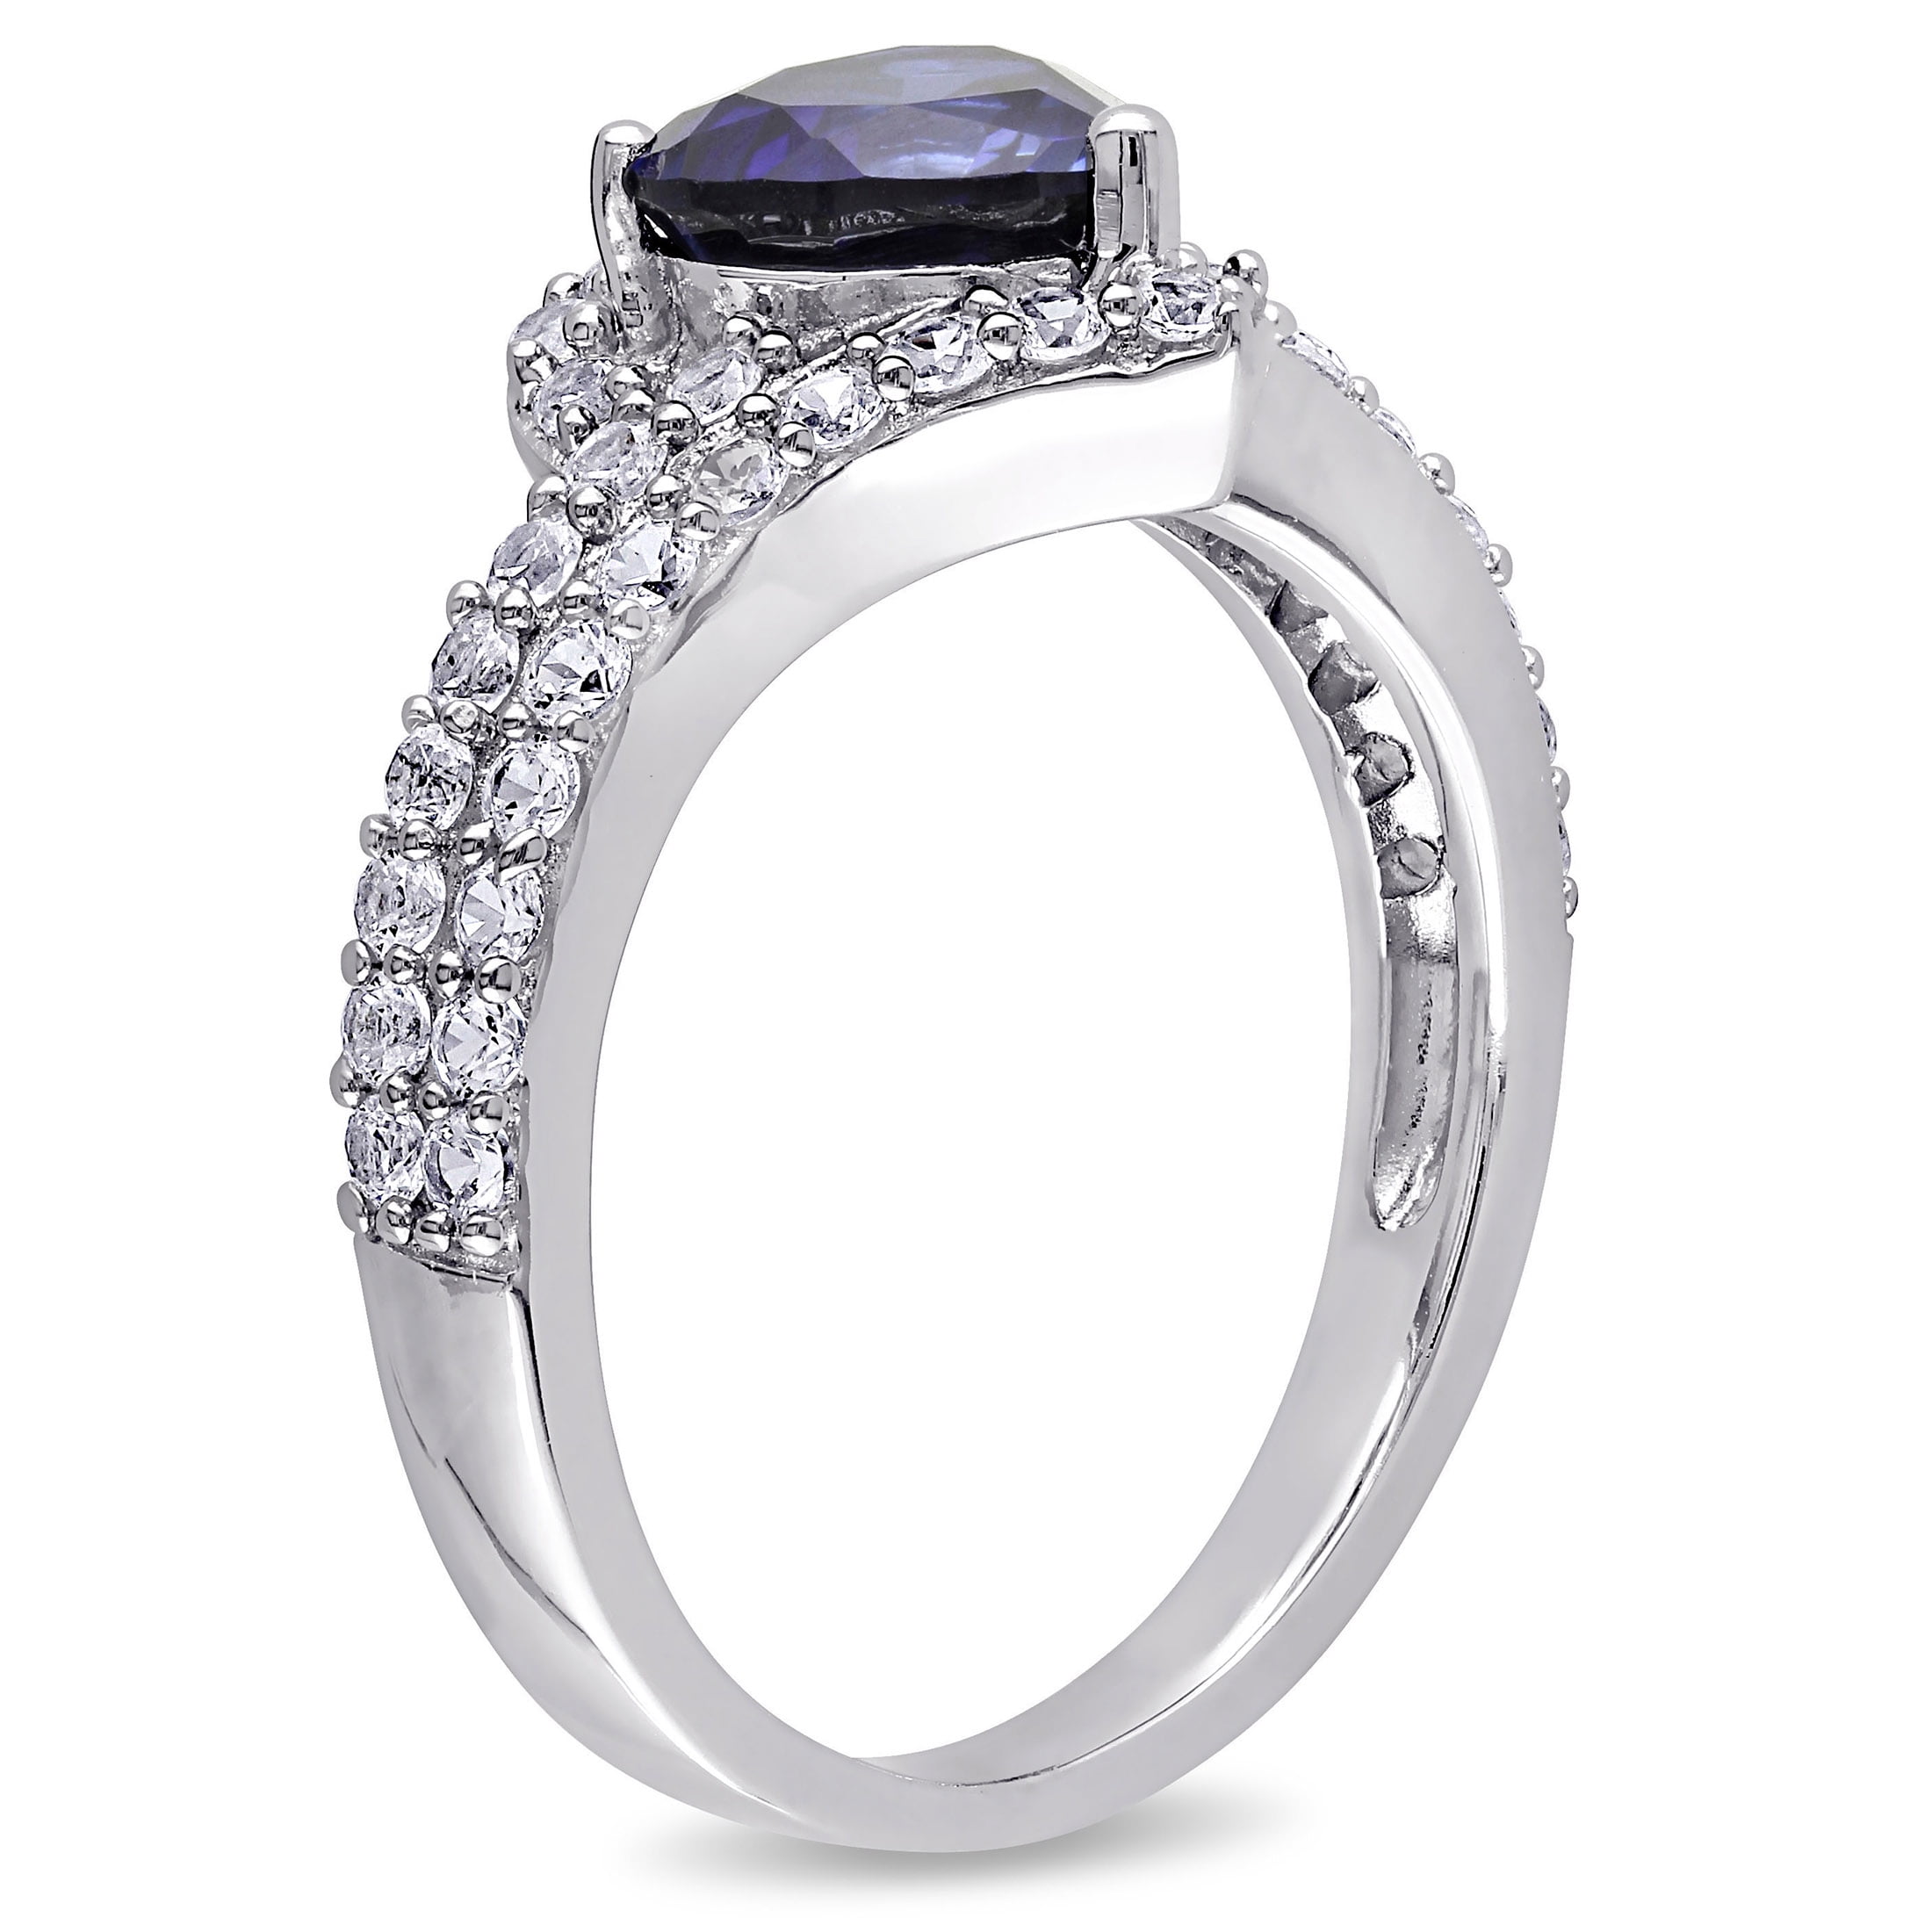 Heart-Shaped Amethyst & White Sapphire Ring in 14K White Gold - Sam's Club